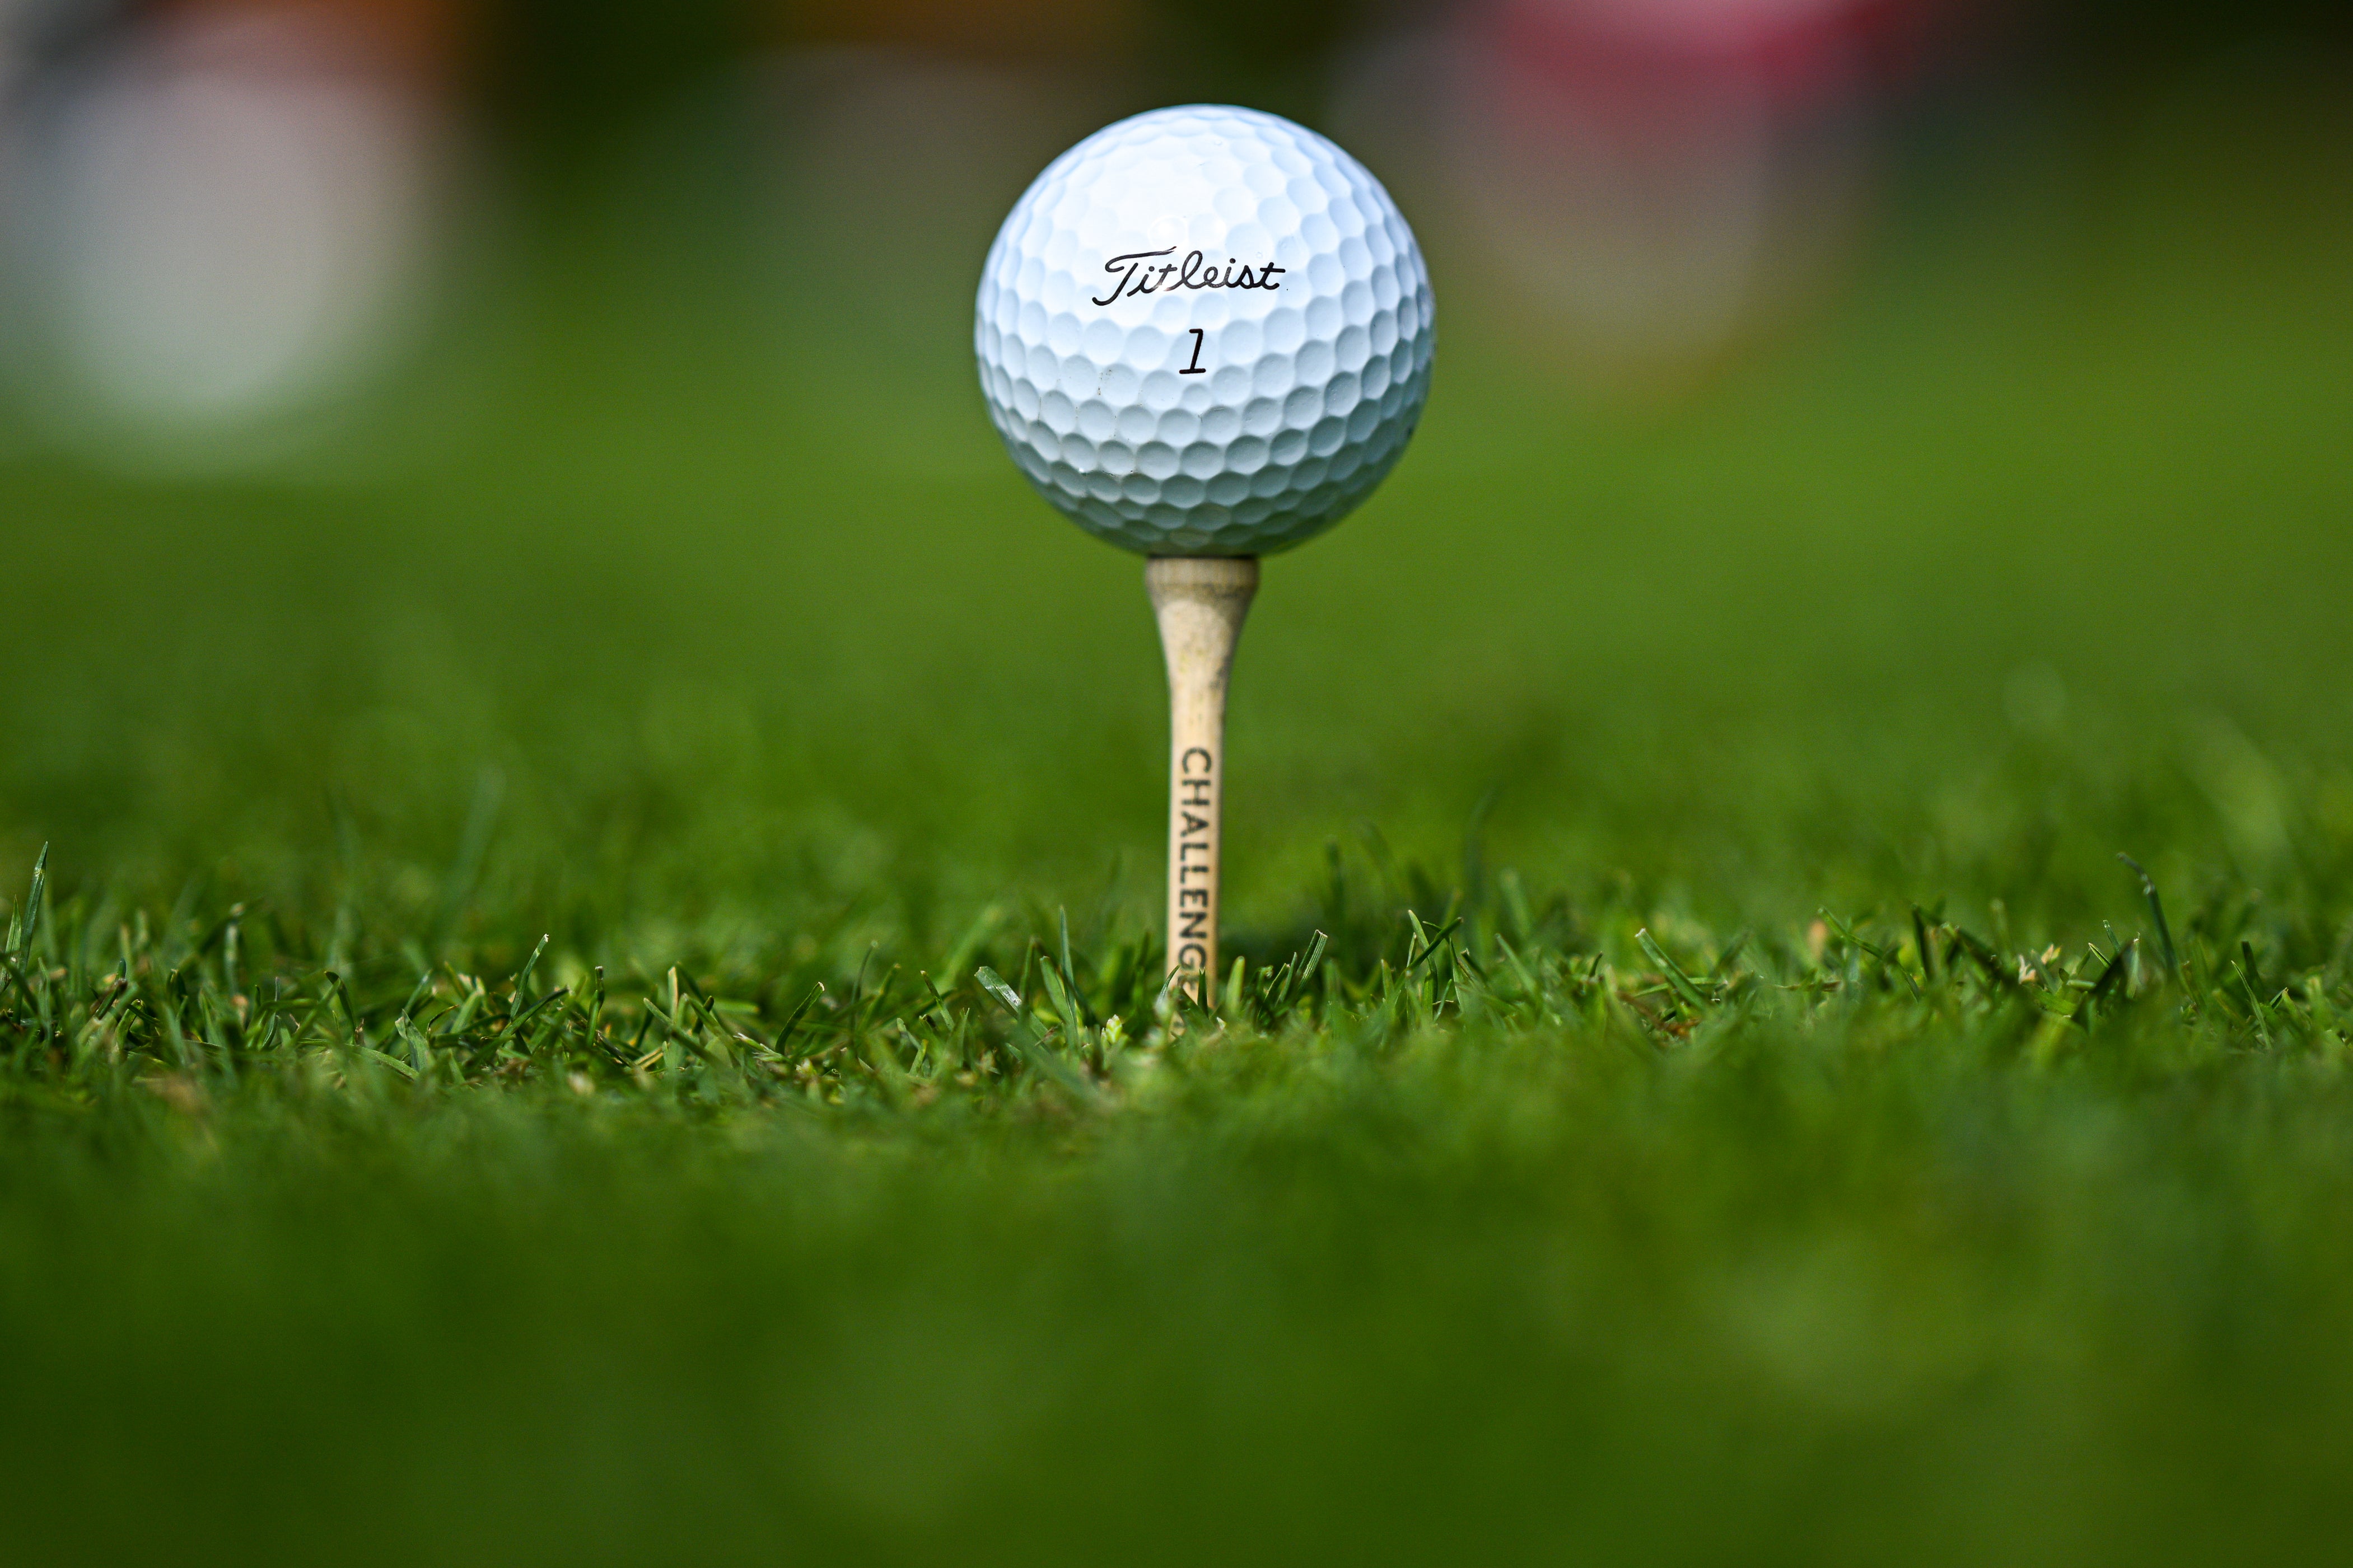 Golf balls will be undergoing new testing beginning in 2028